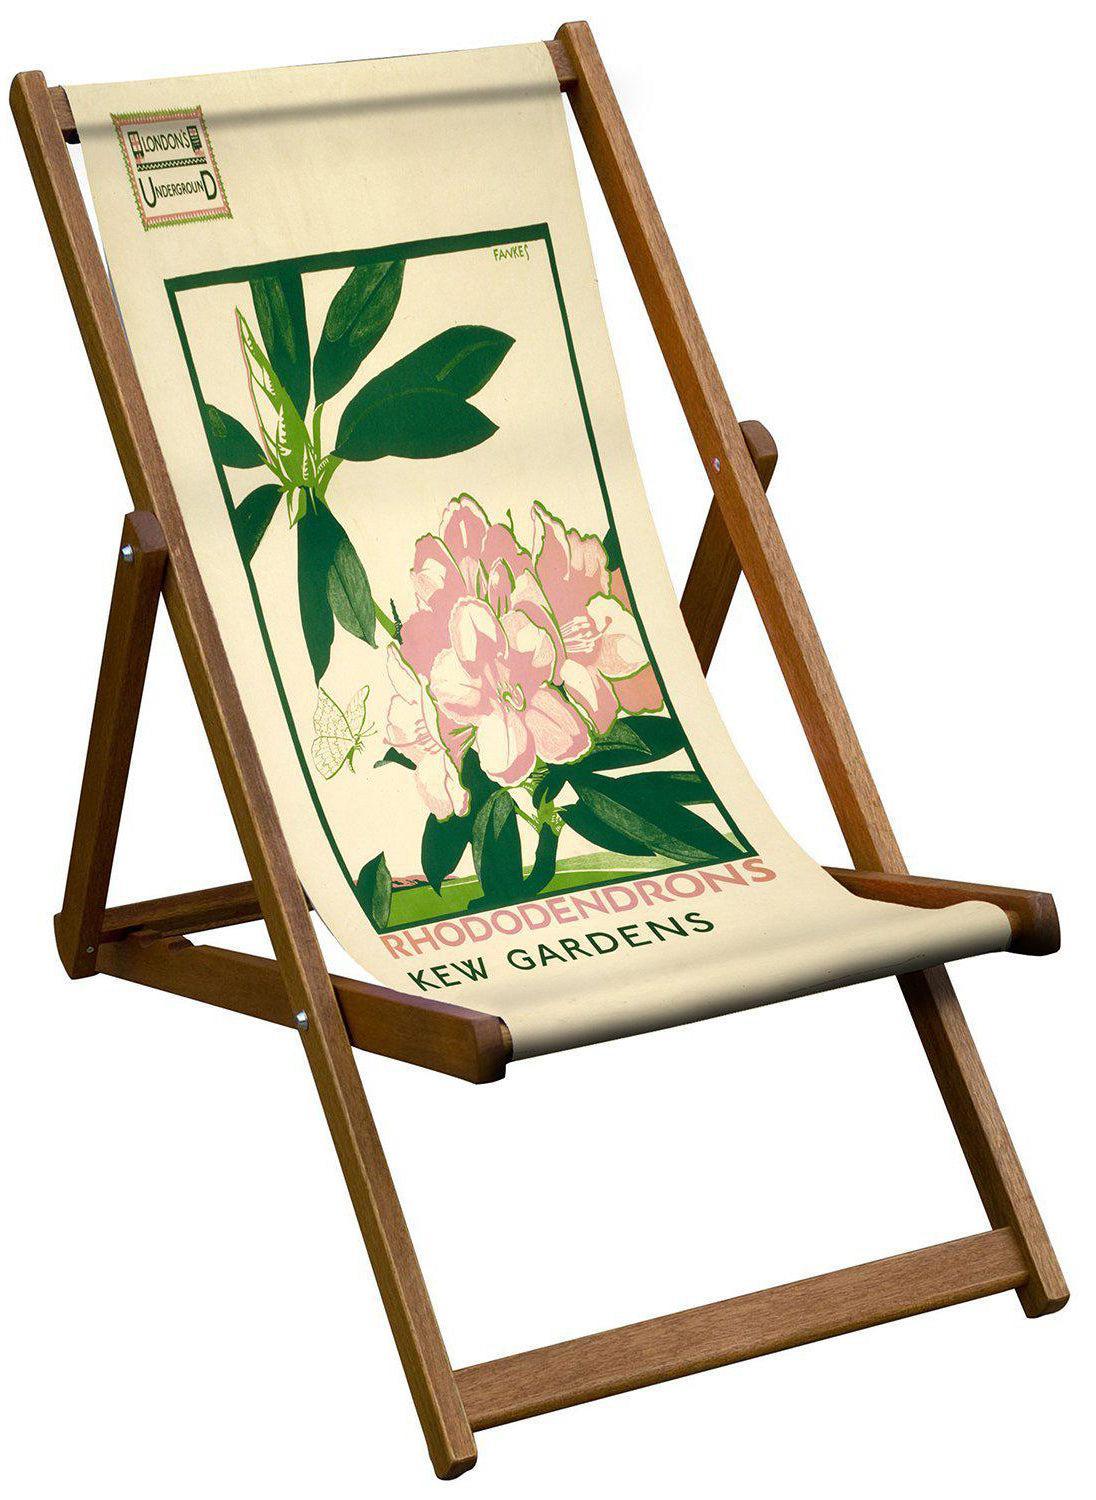 Rhododendrons - London Transport Deckchair